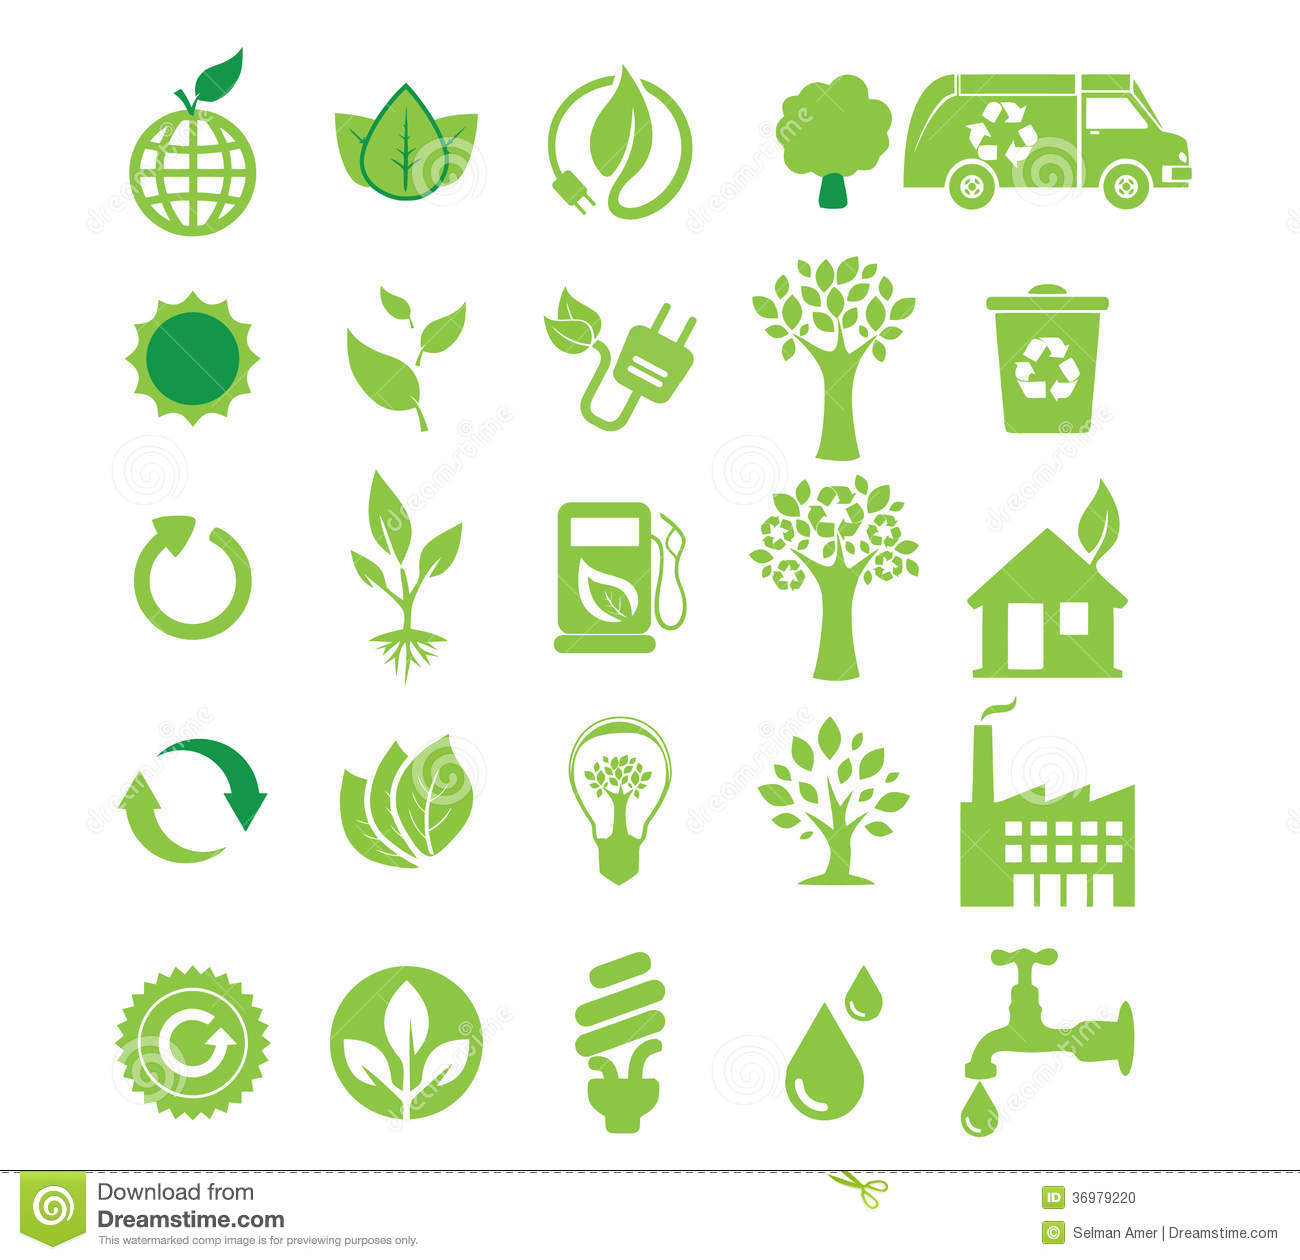 8 Green Energy Icon Images - Green Energy Symbol Clip Art, Renewable